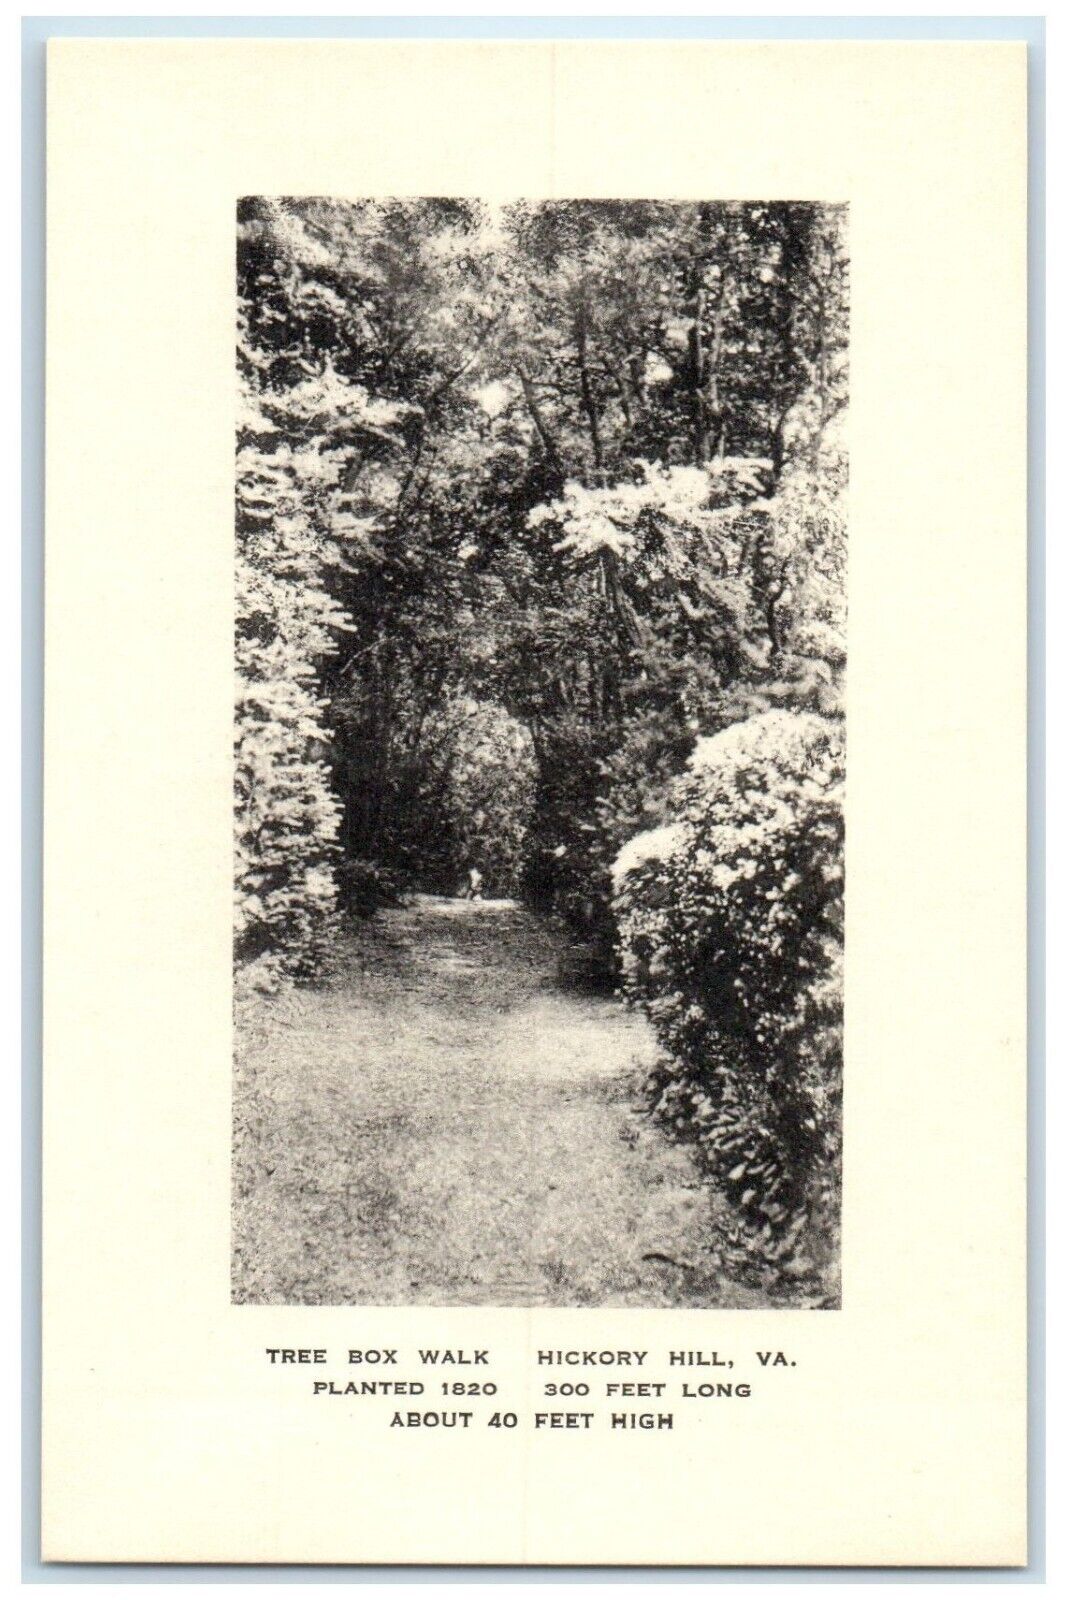 c1940 Tree Box Walk Plants Forest Hickory Hill Virginia Vintage Antique Postcard